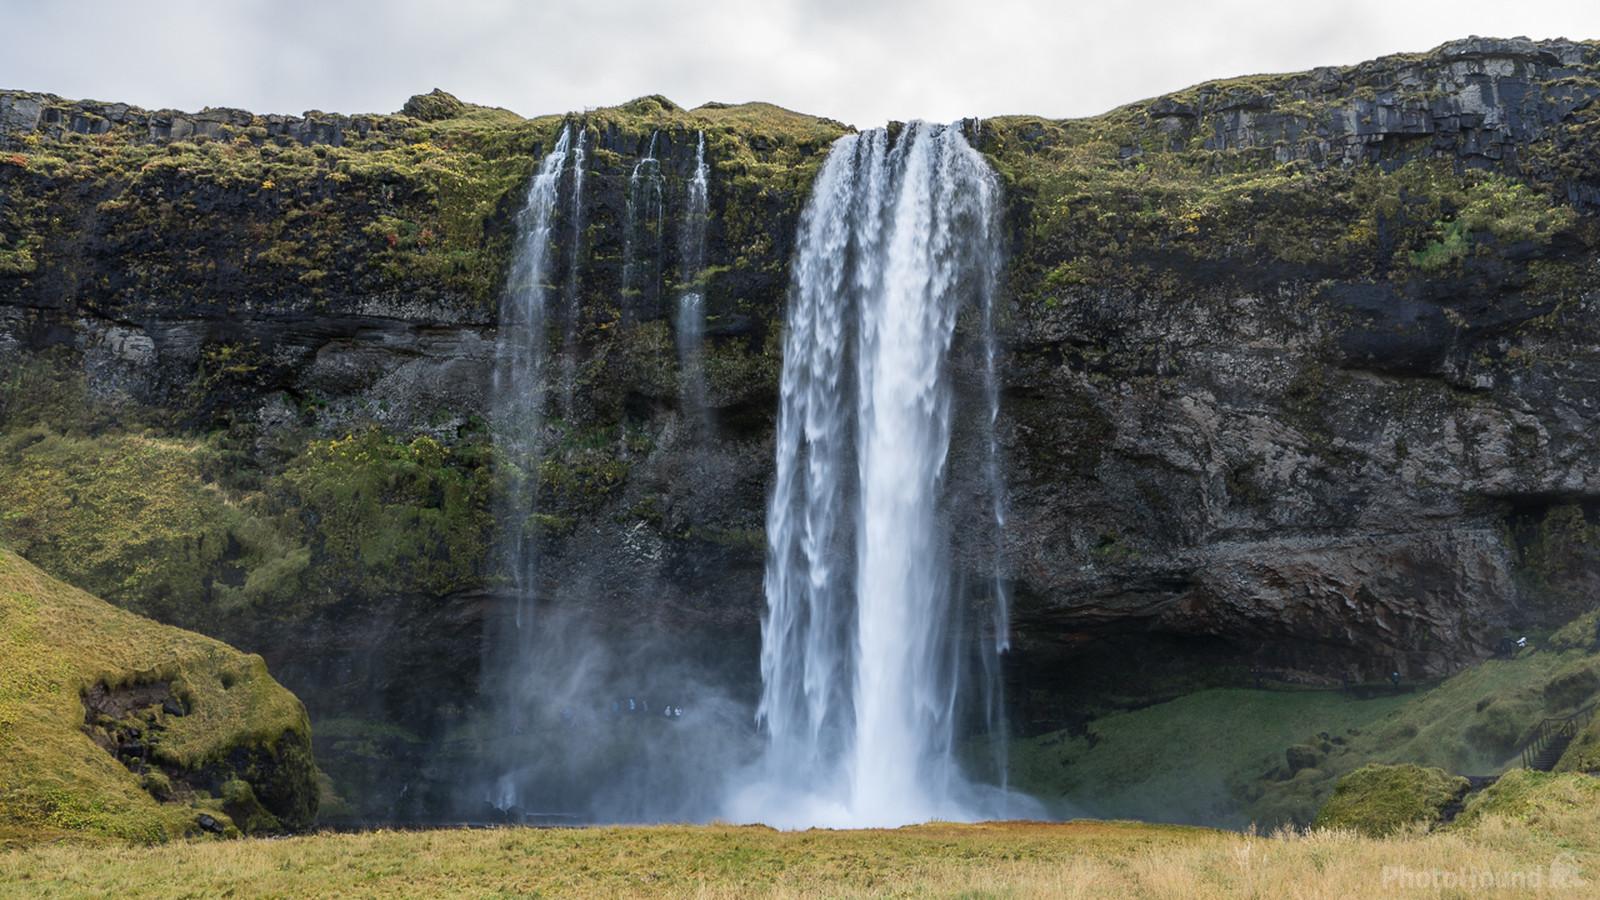 Image of Seljalandsfoss - walk behind the waterfall by JAMES BILLINGS